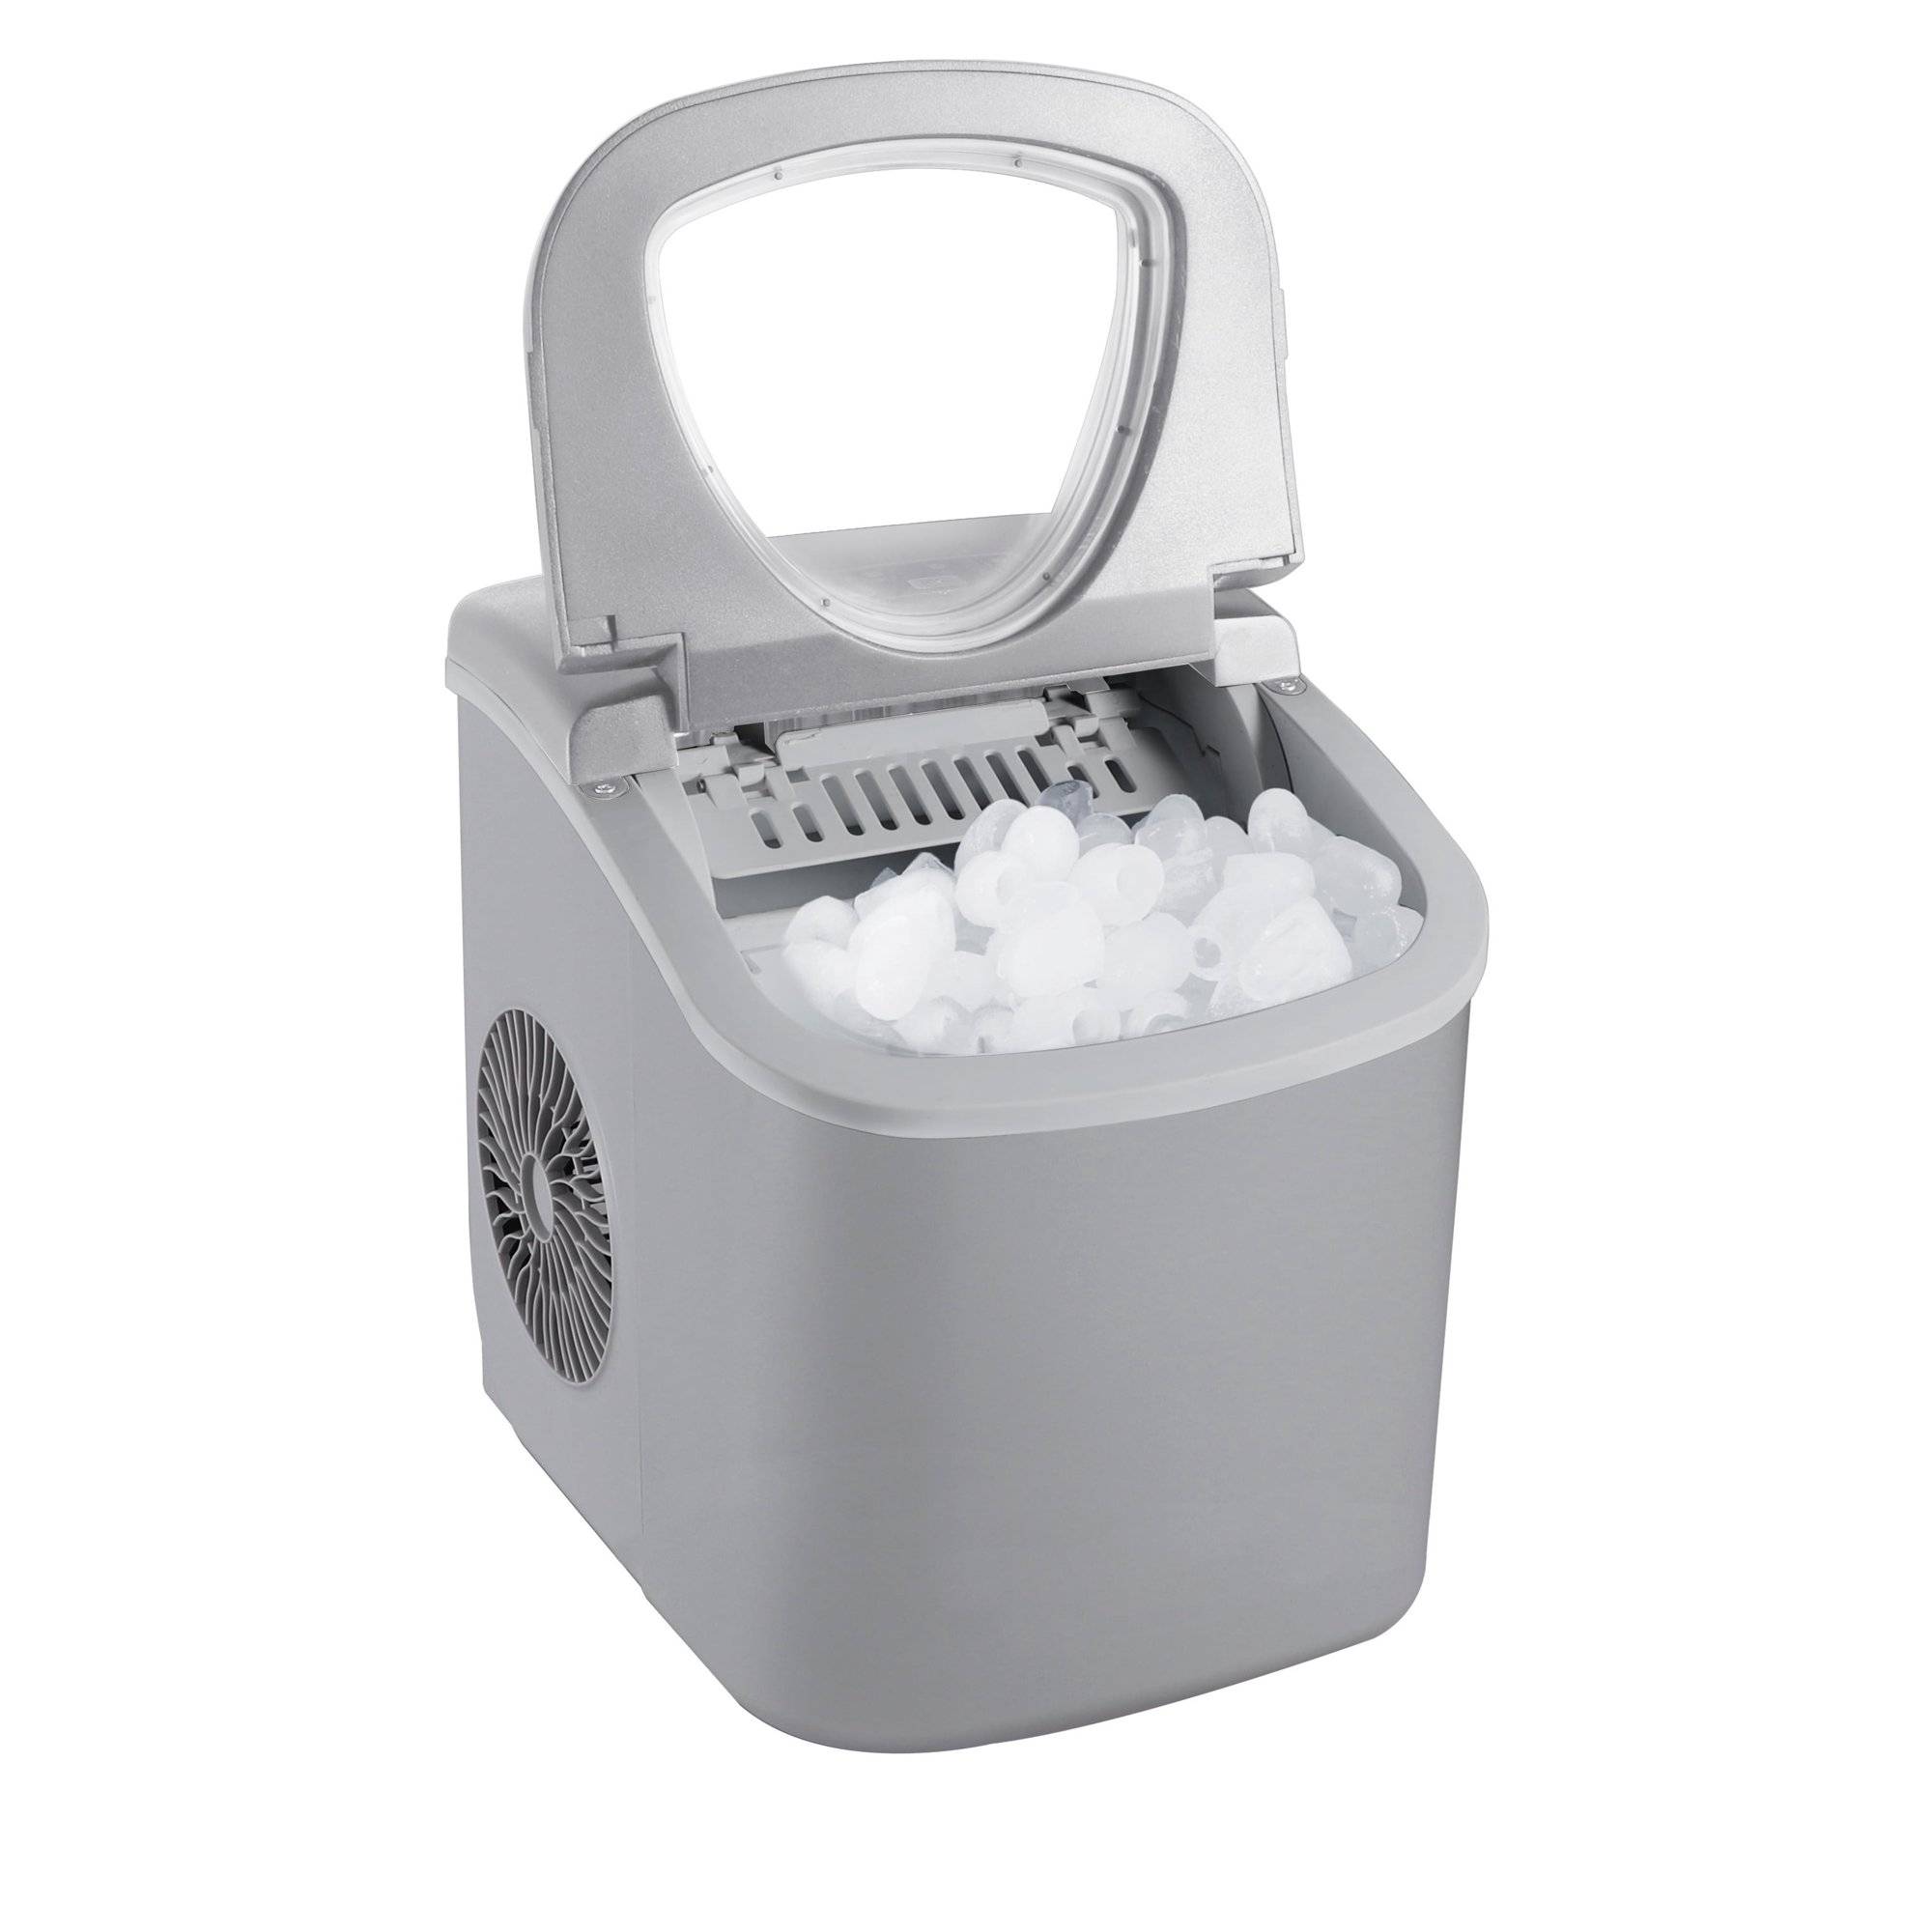 Z-Linke Small Countertop Ice Maker Machine, Portable, 26 Pound